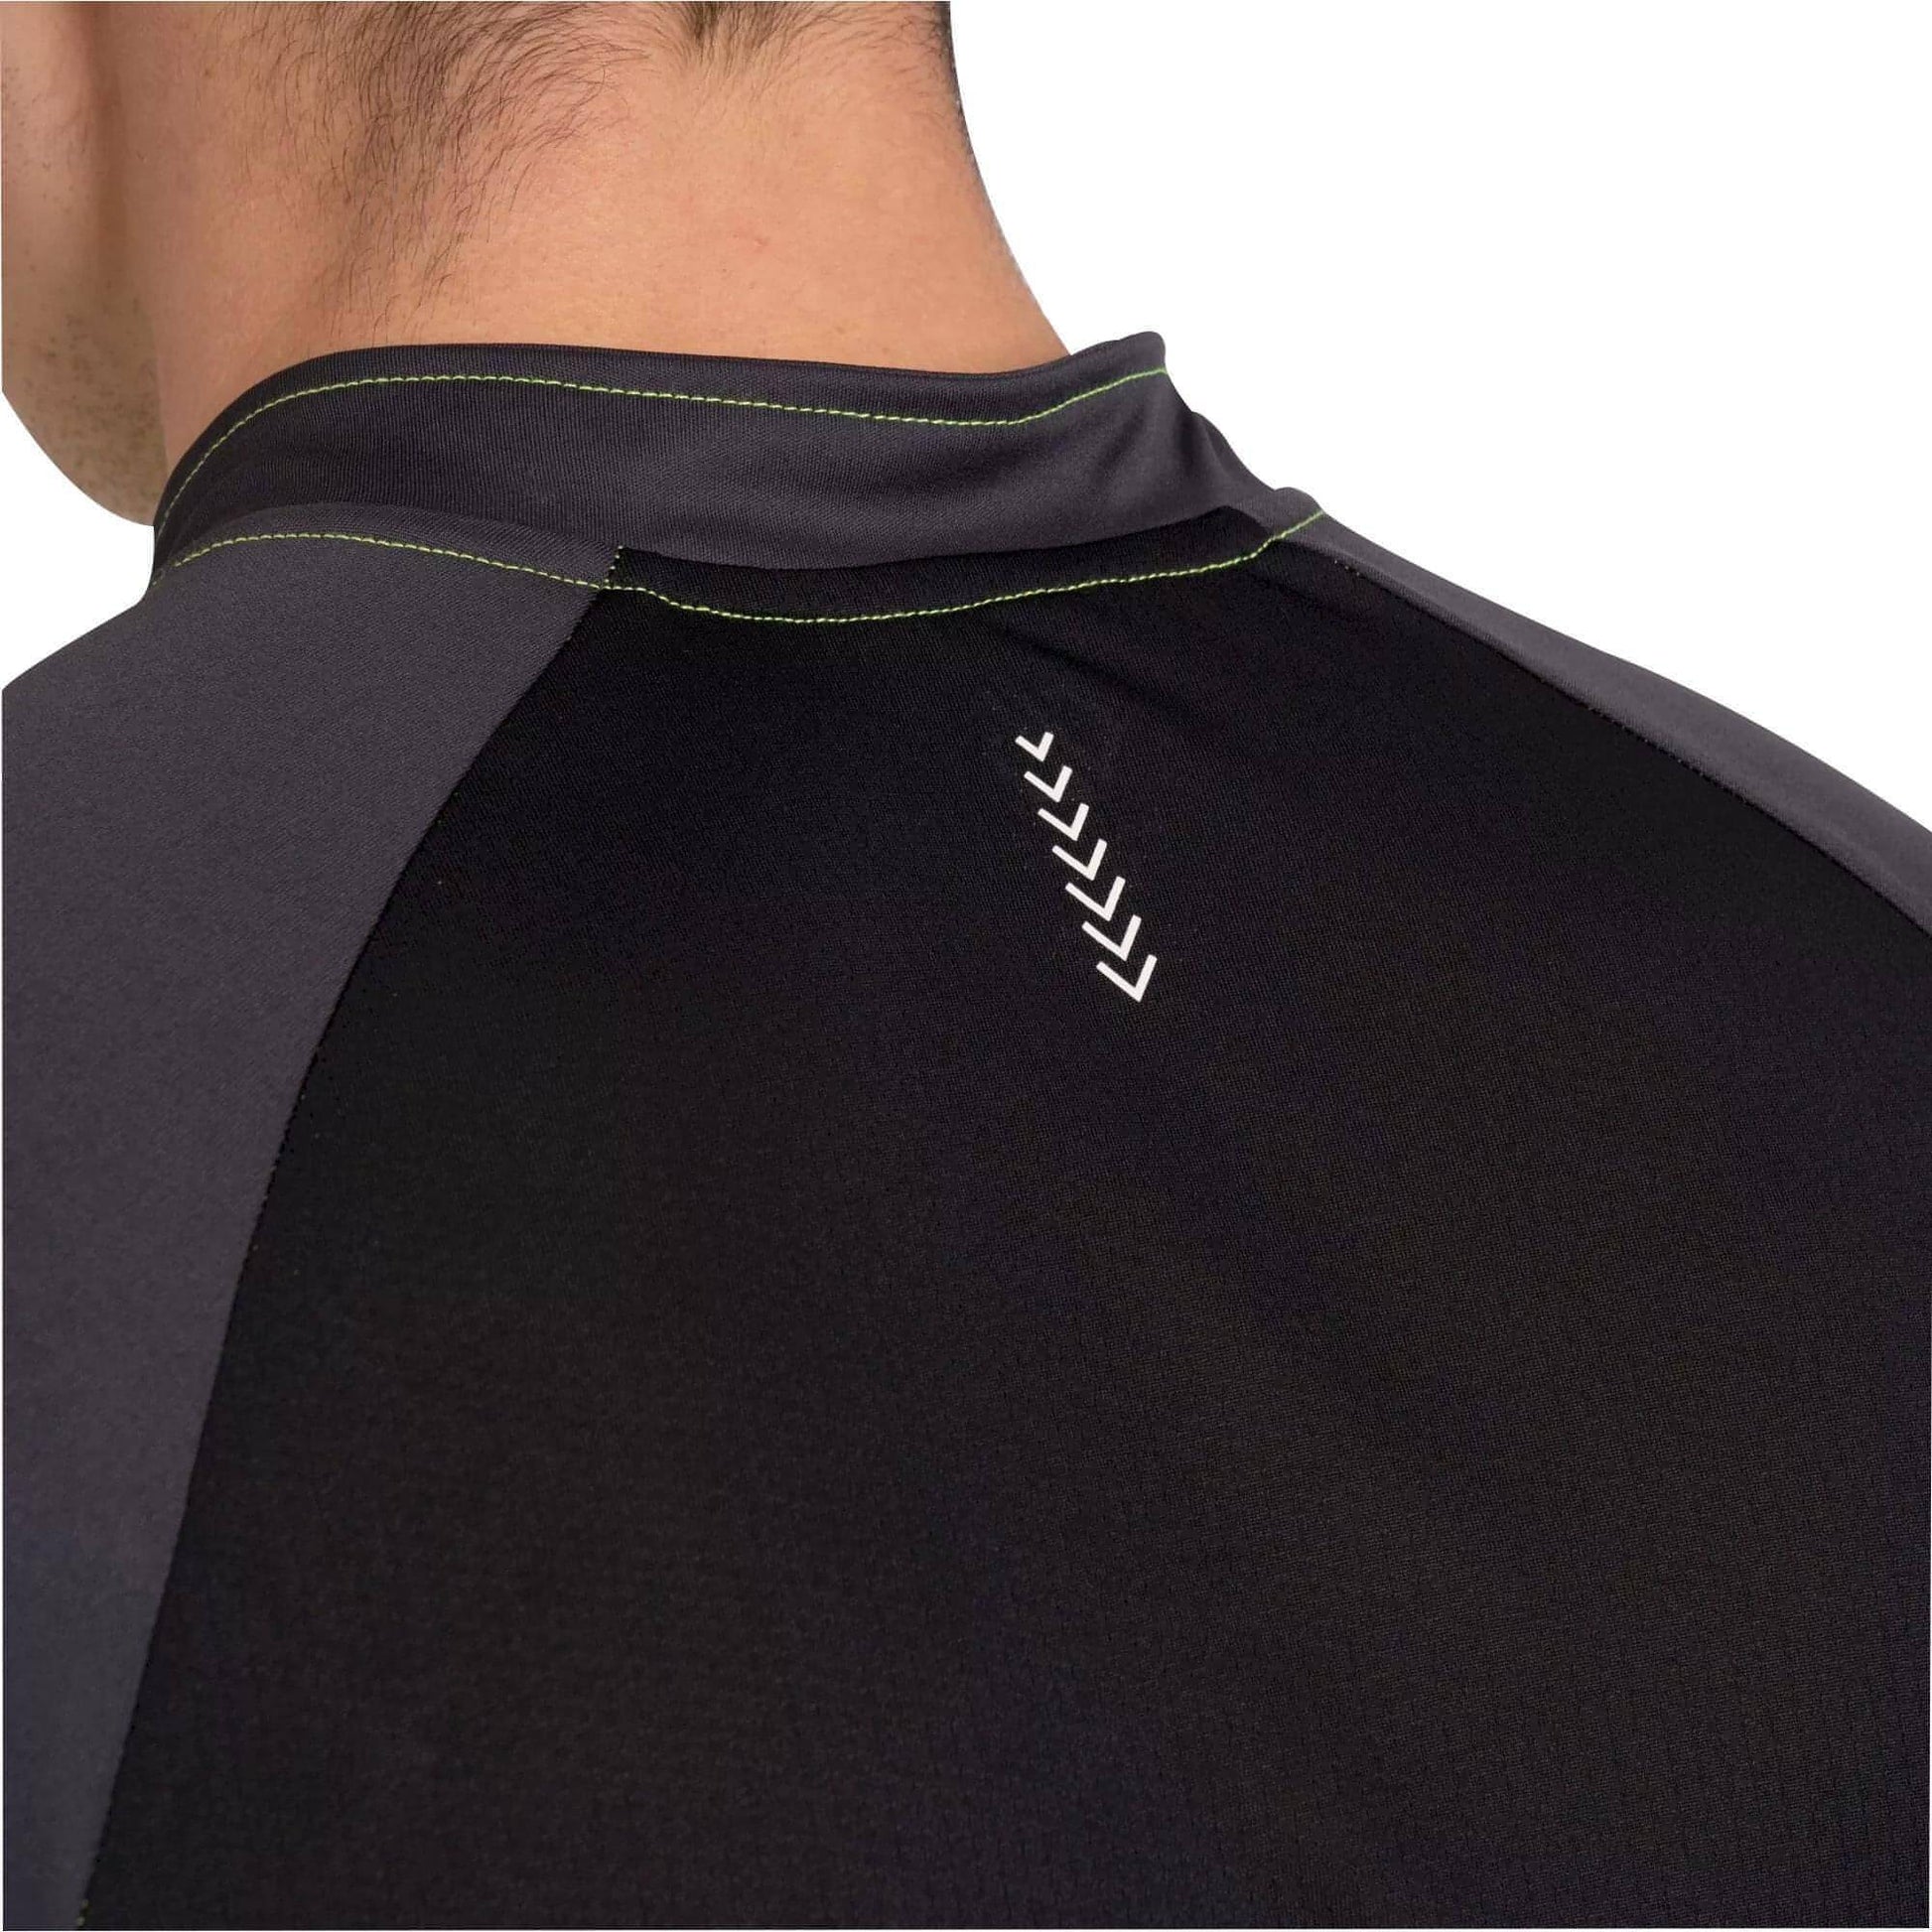 Dare2B Protaction Short Sleeve Jersey Dmt568  Details